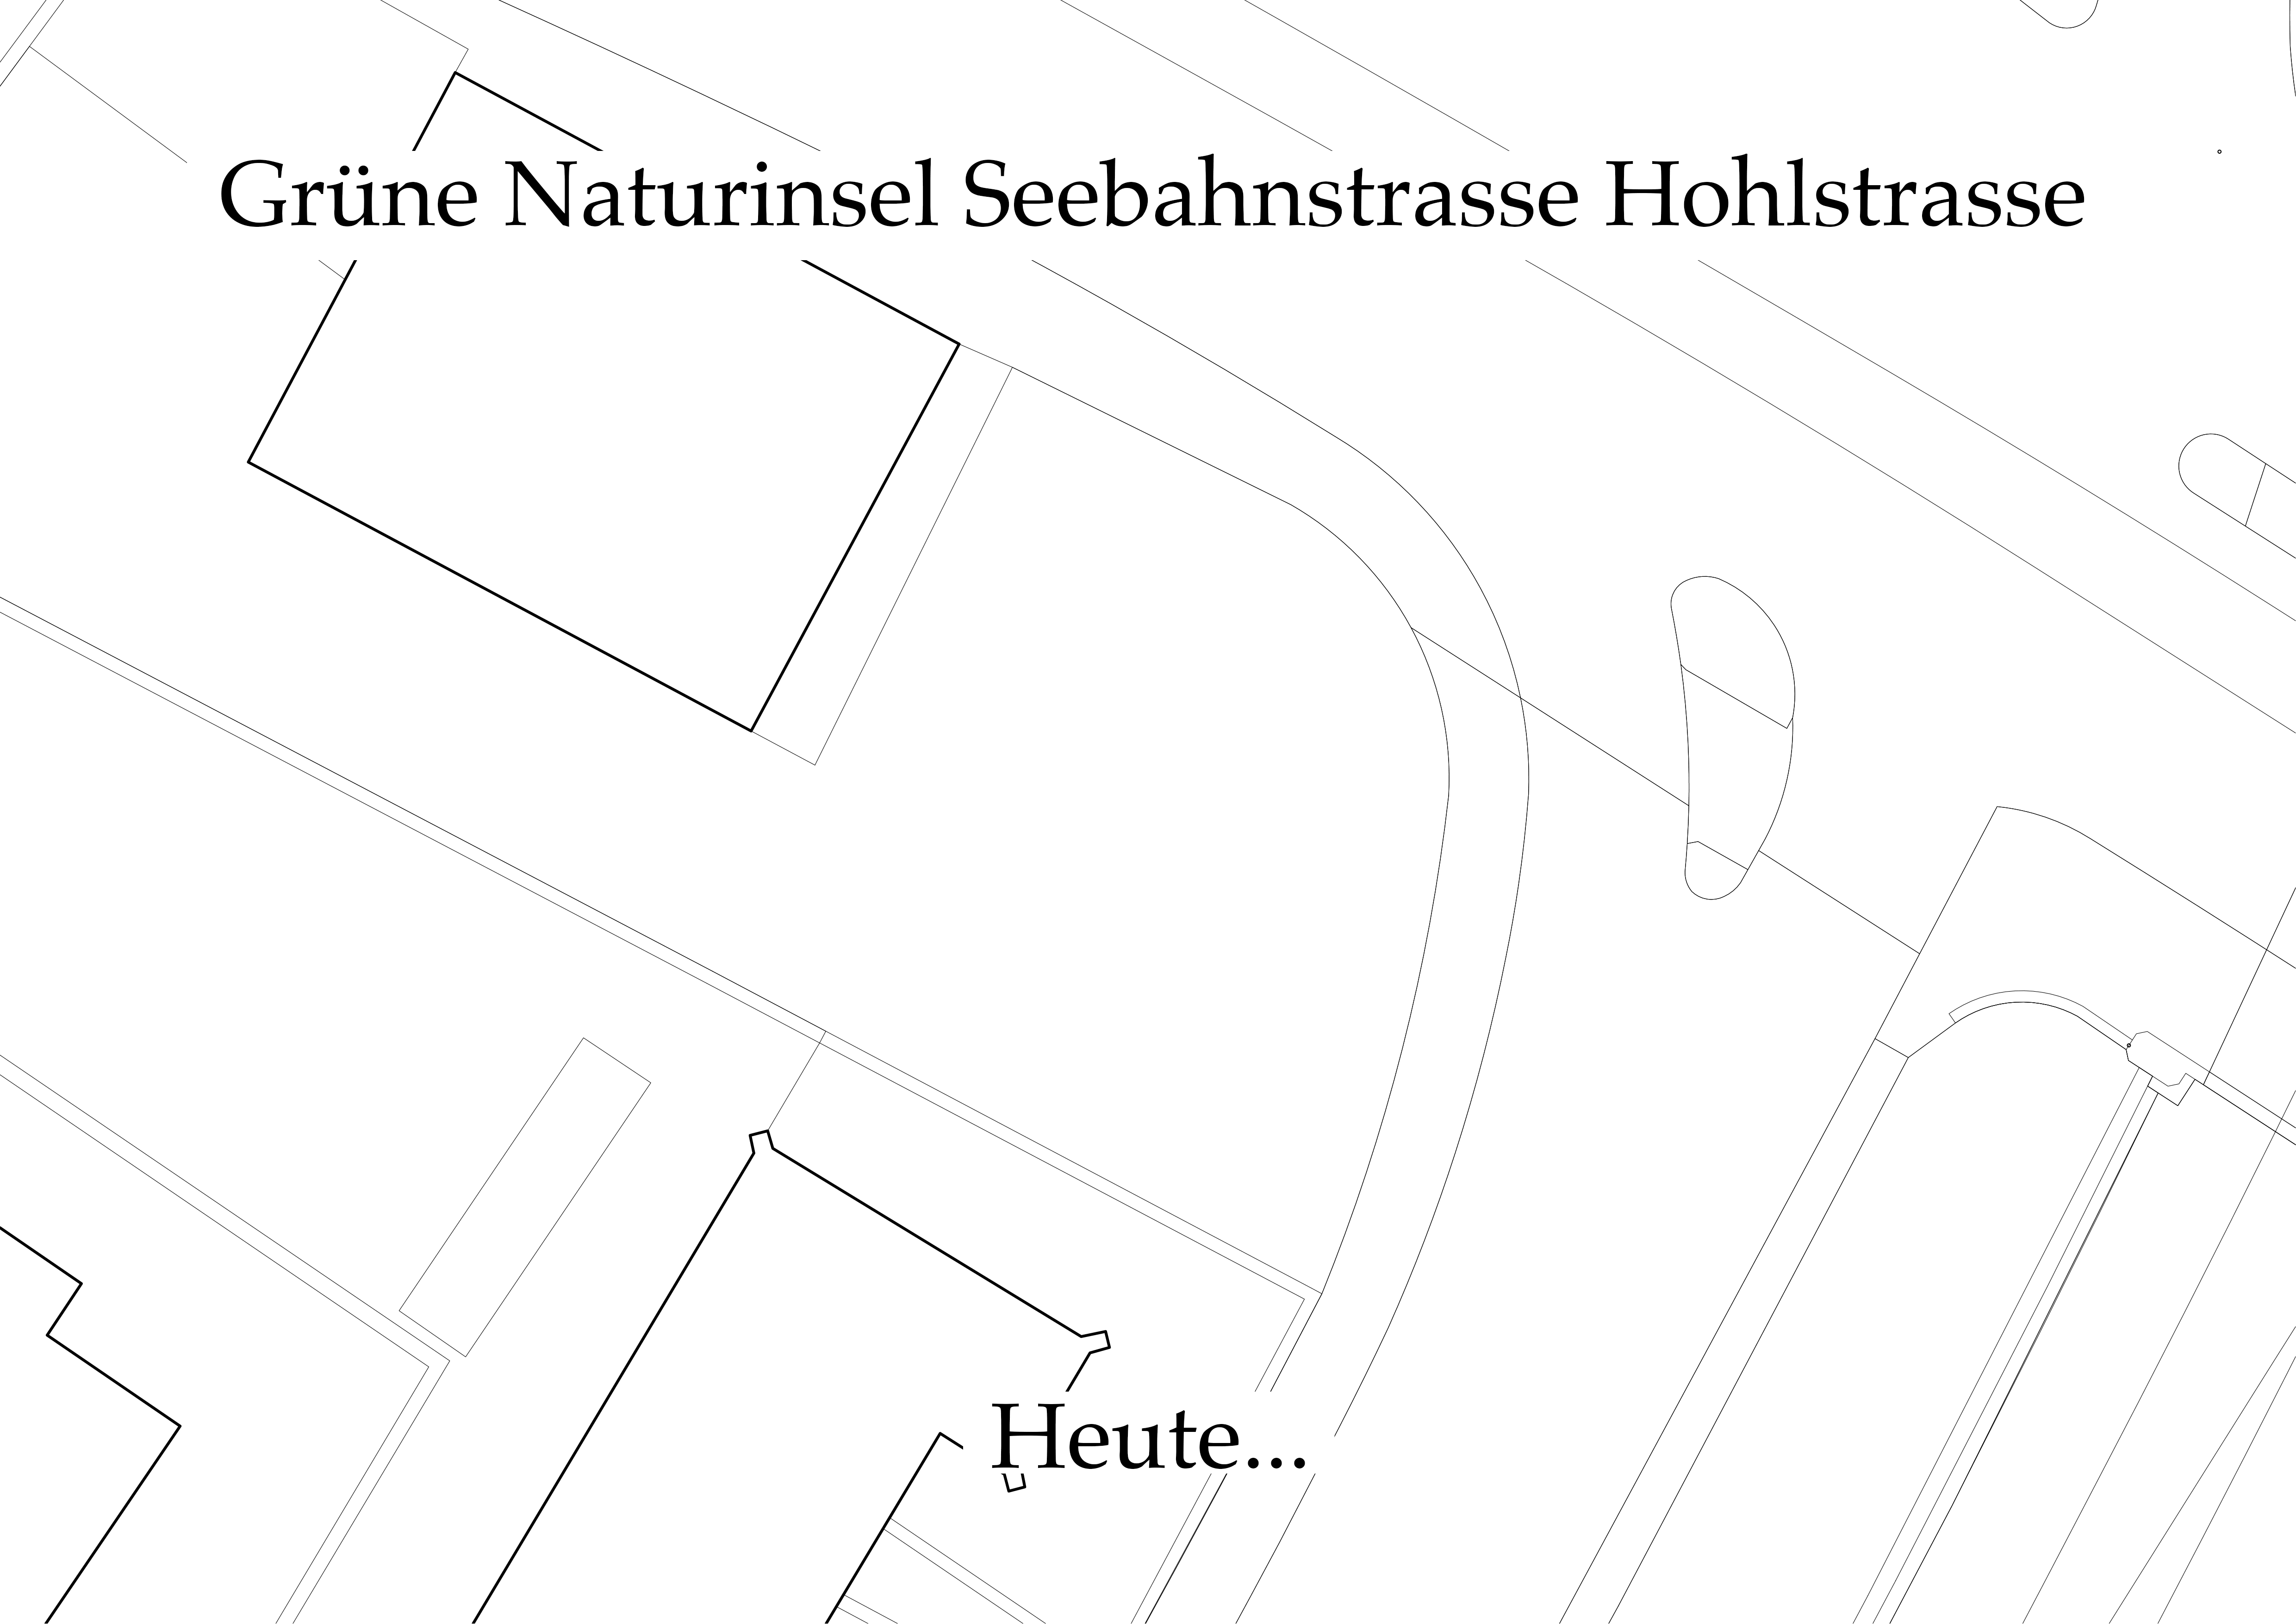 Plan Seebahn-/Hohlstrasse